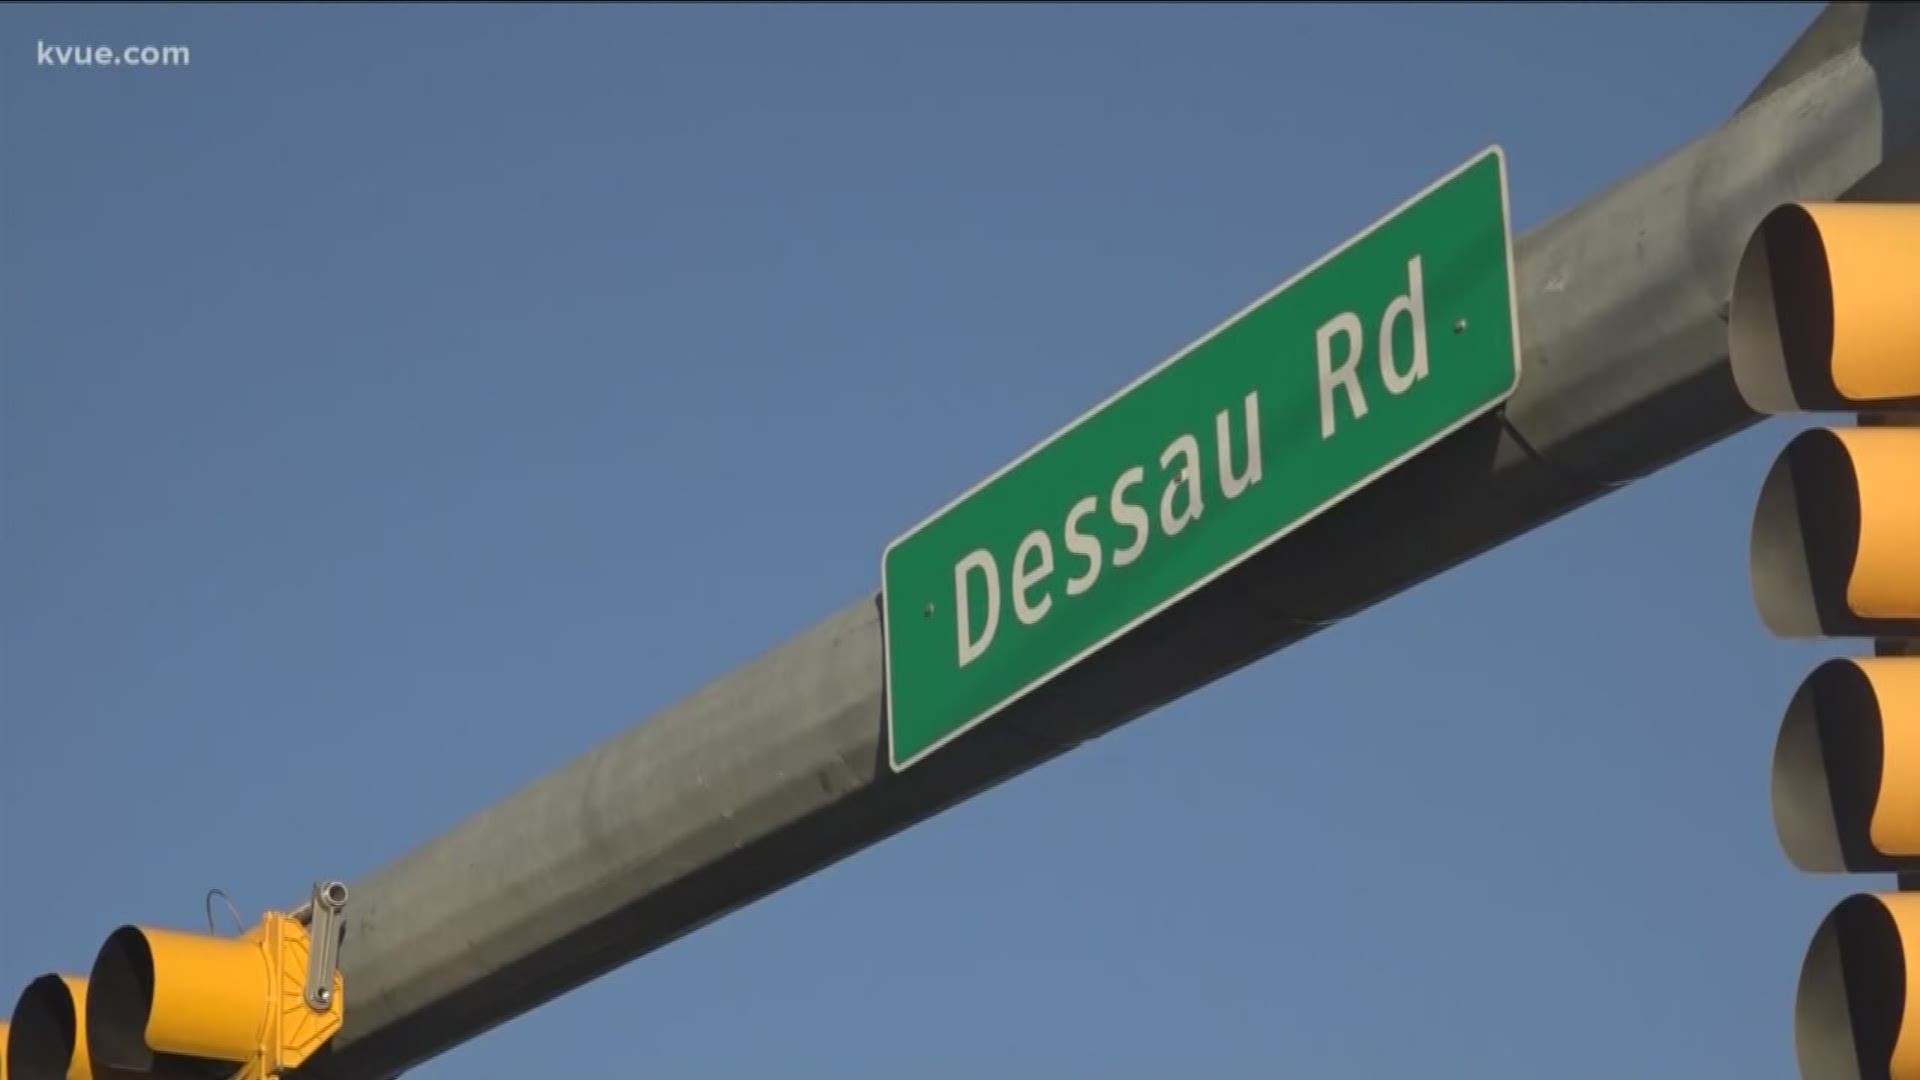 The Austin Transportation Department is working to make Dessau Road safer.